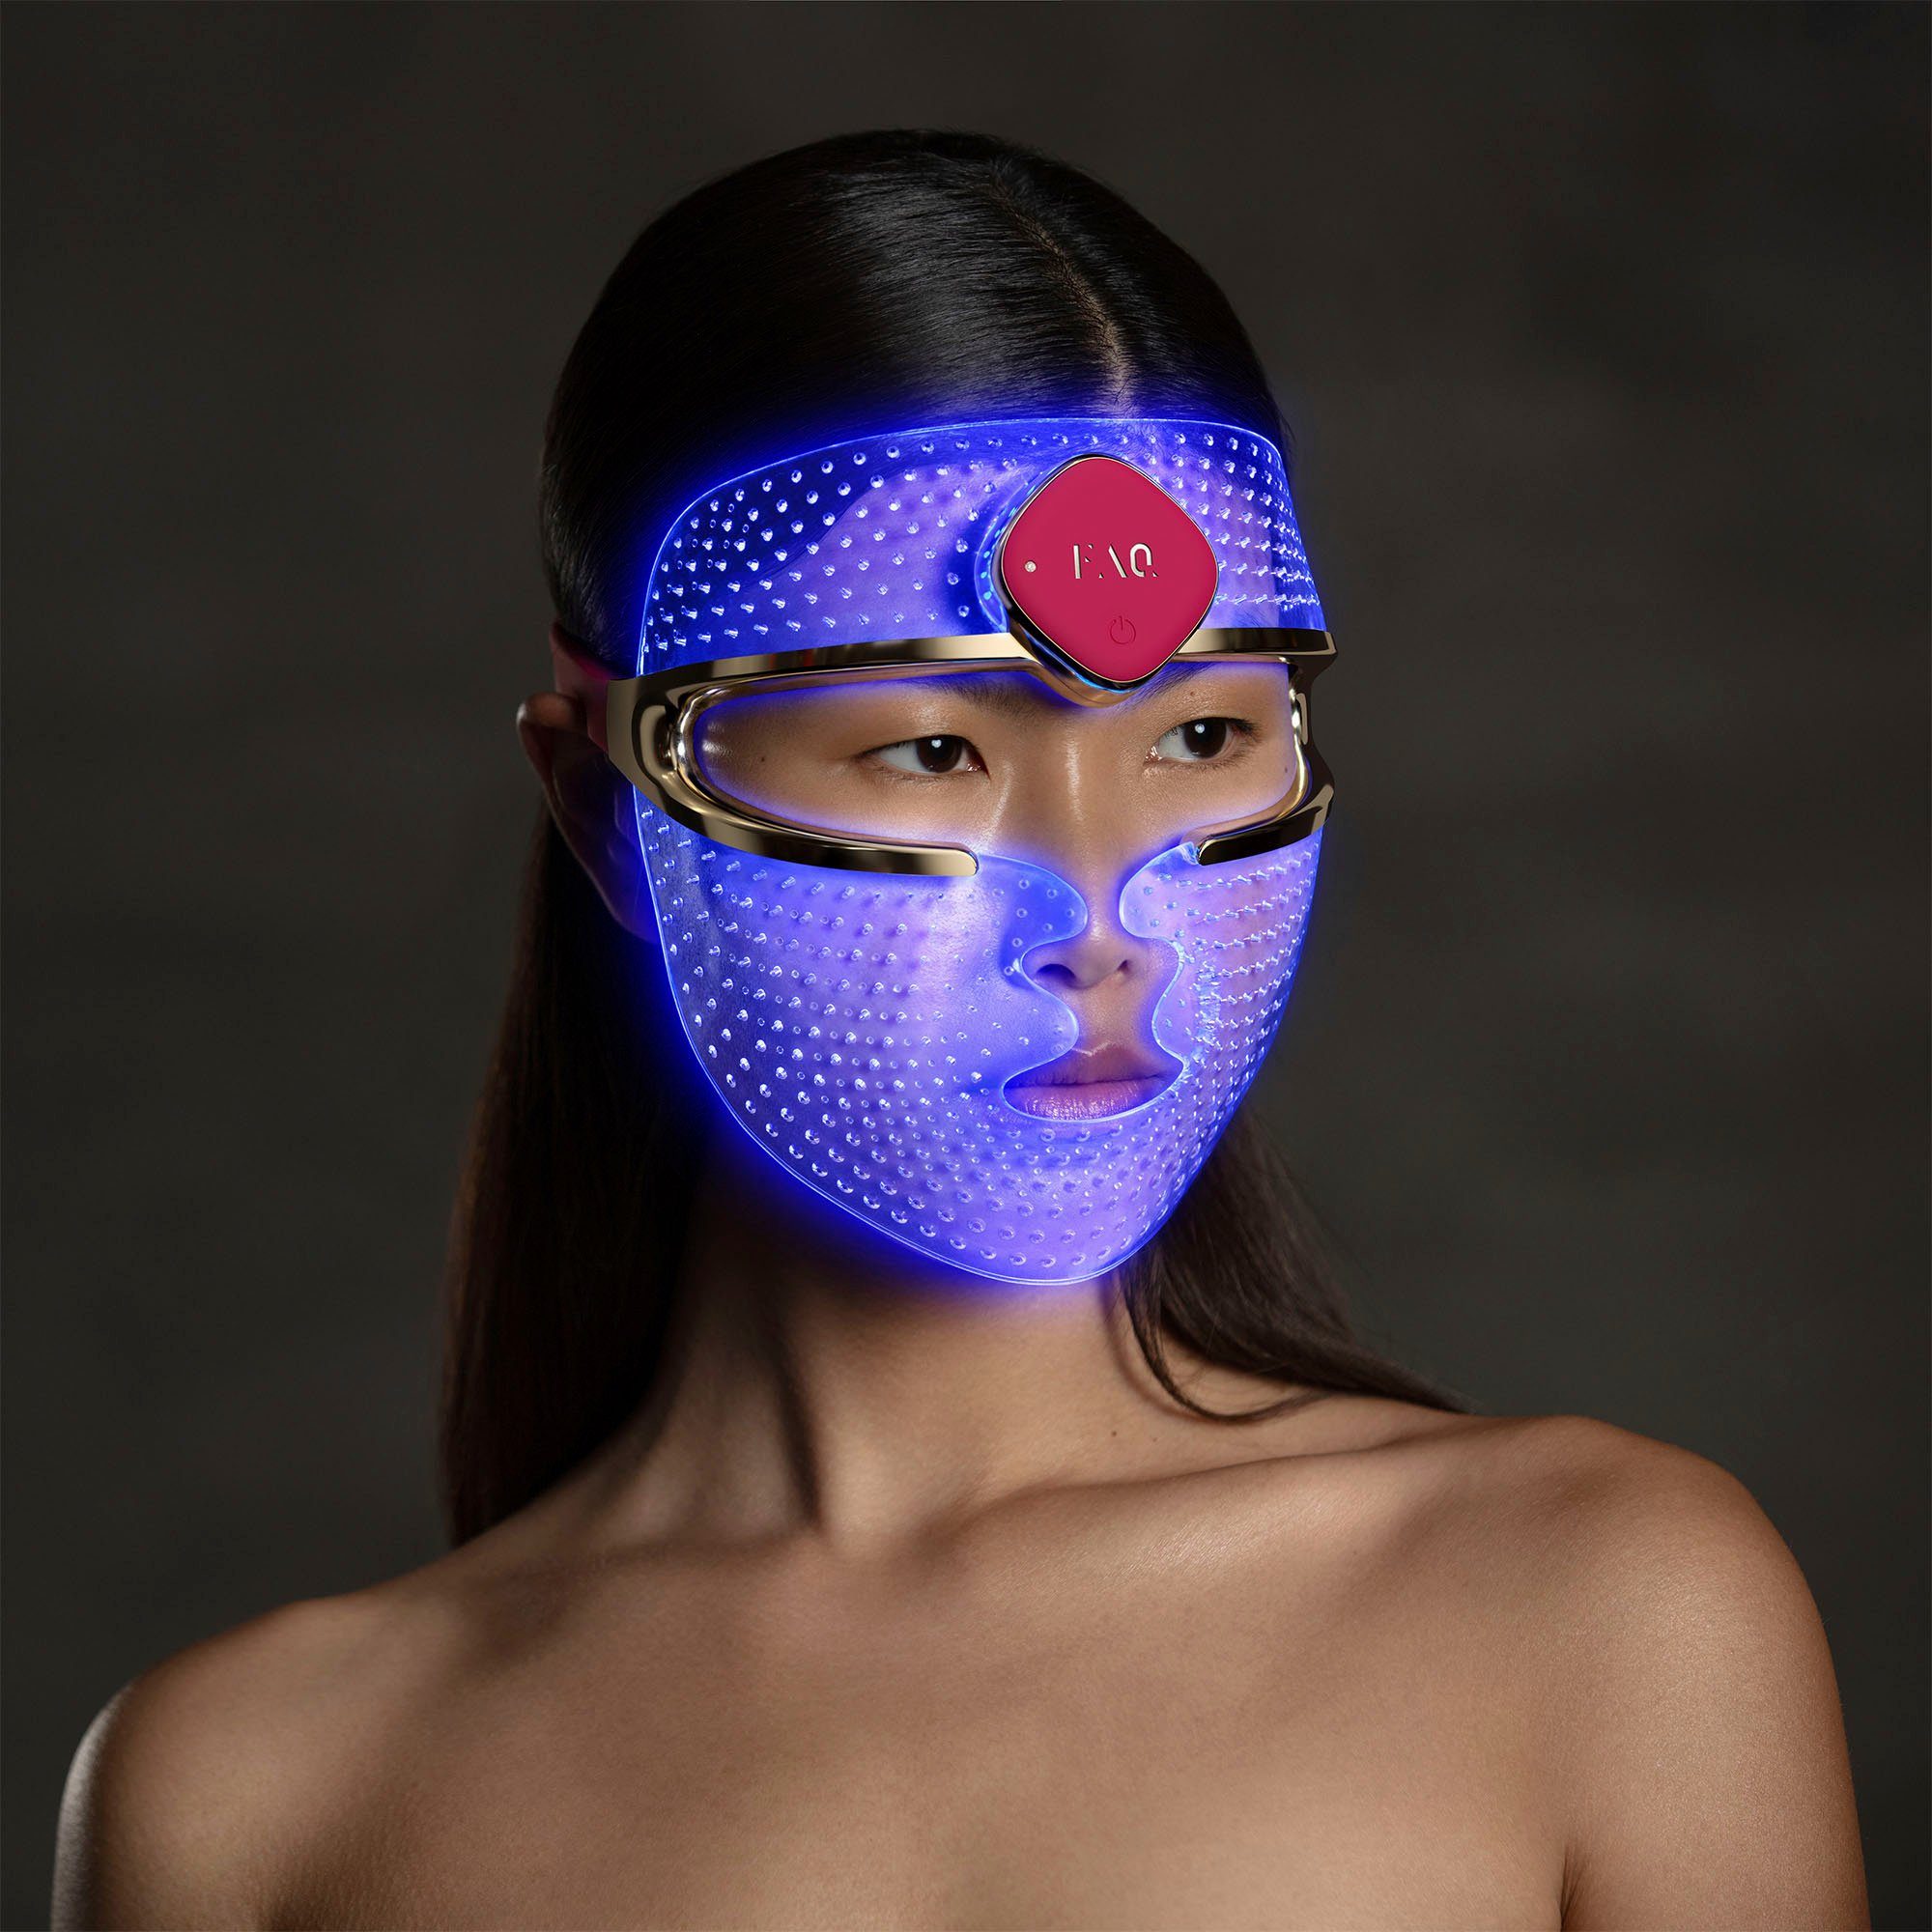 FAQ™ Mikrodermabrasionsgerät FAQ™ 201 mit Silicone LED LED Farben Face 3 Mask, Gesichtsmaske